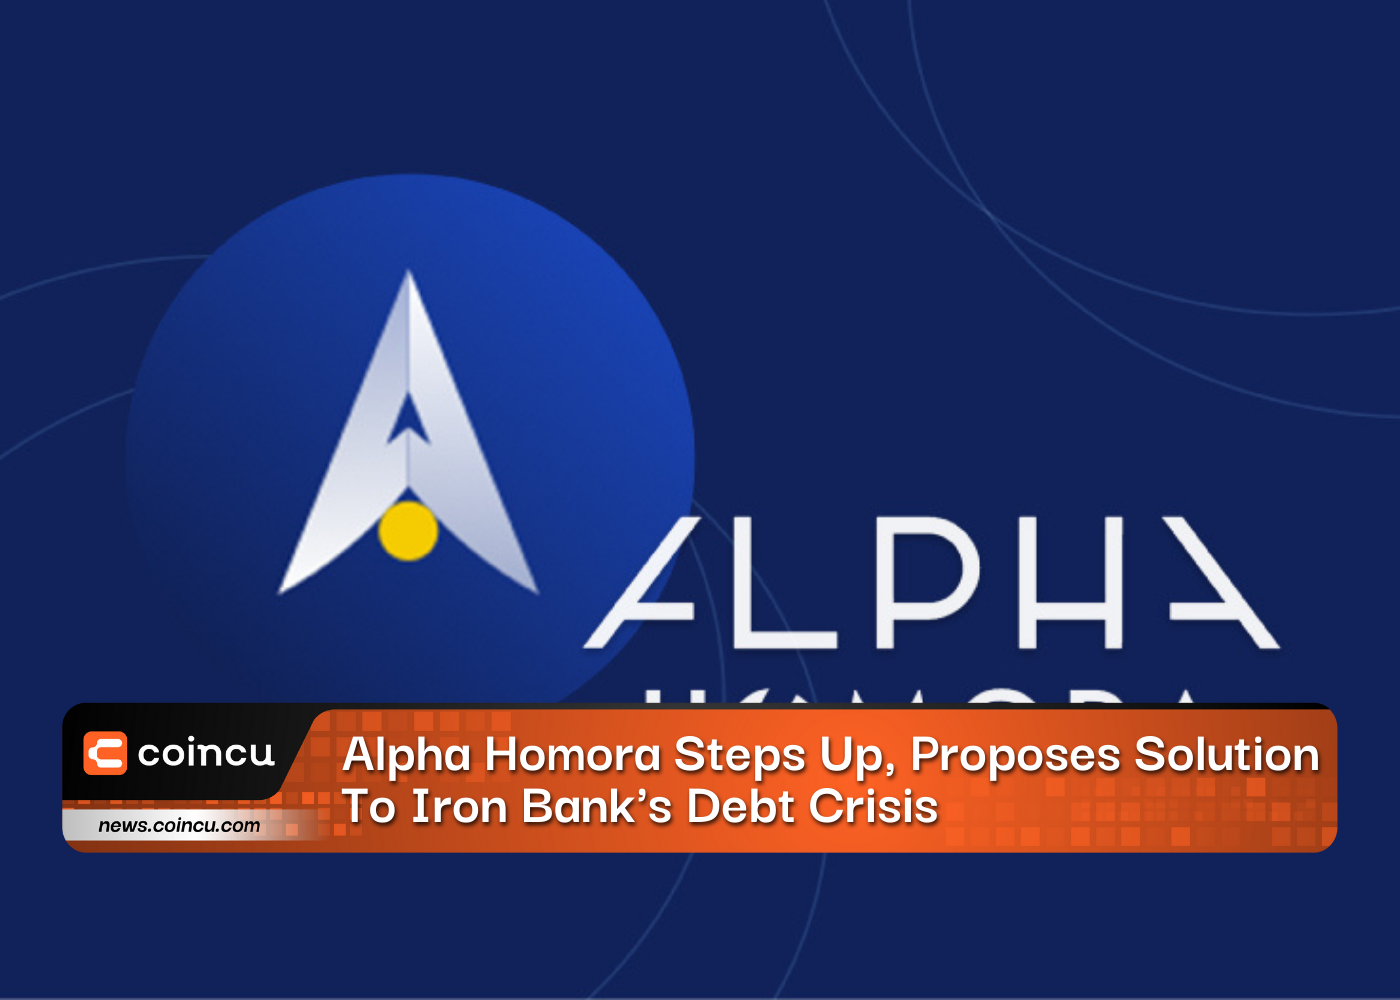 Alpha Homora 提出解决方案